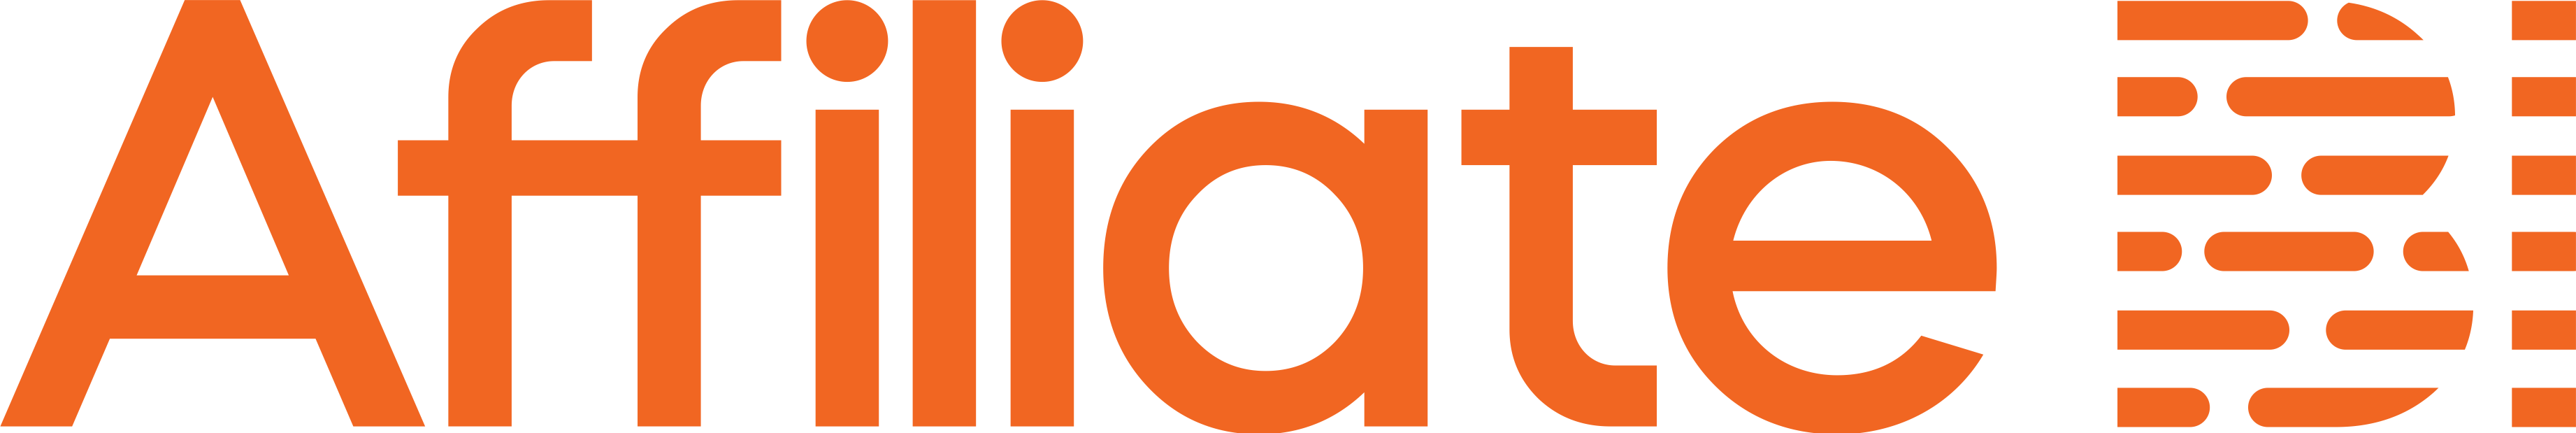 Logo for Affiliate BI